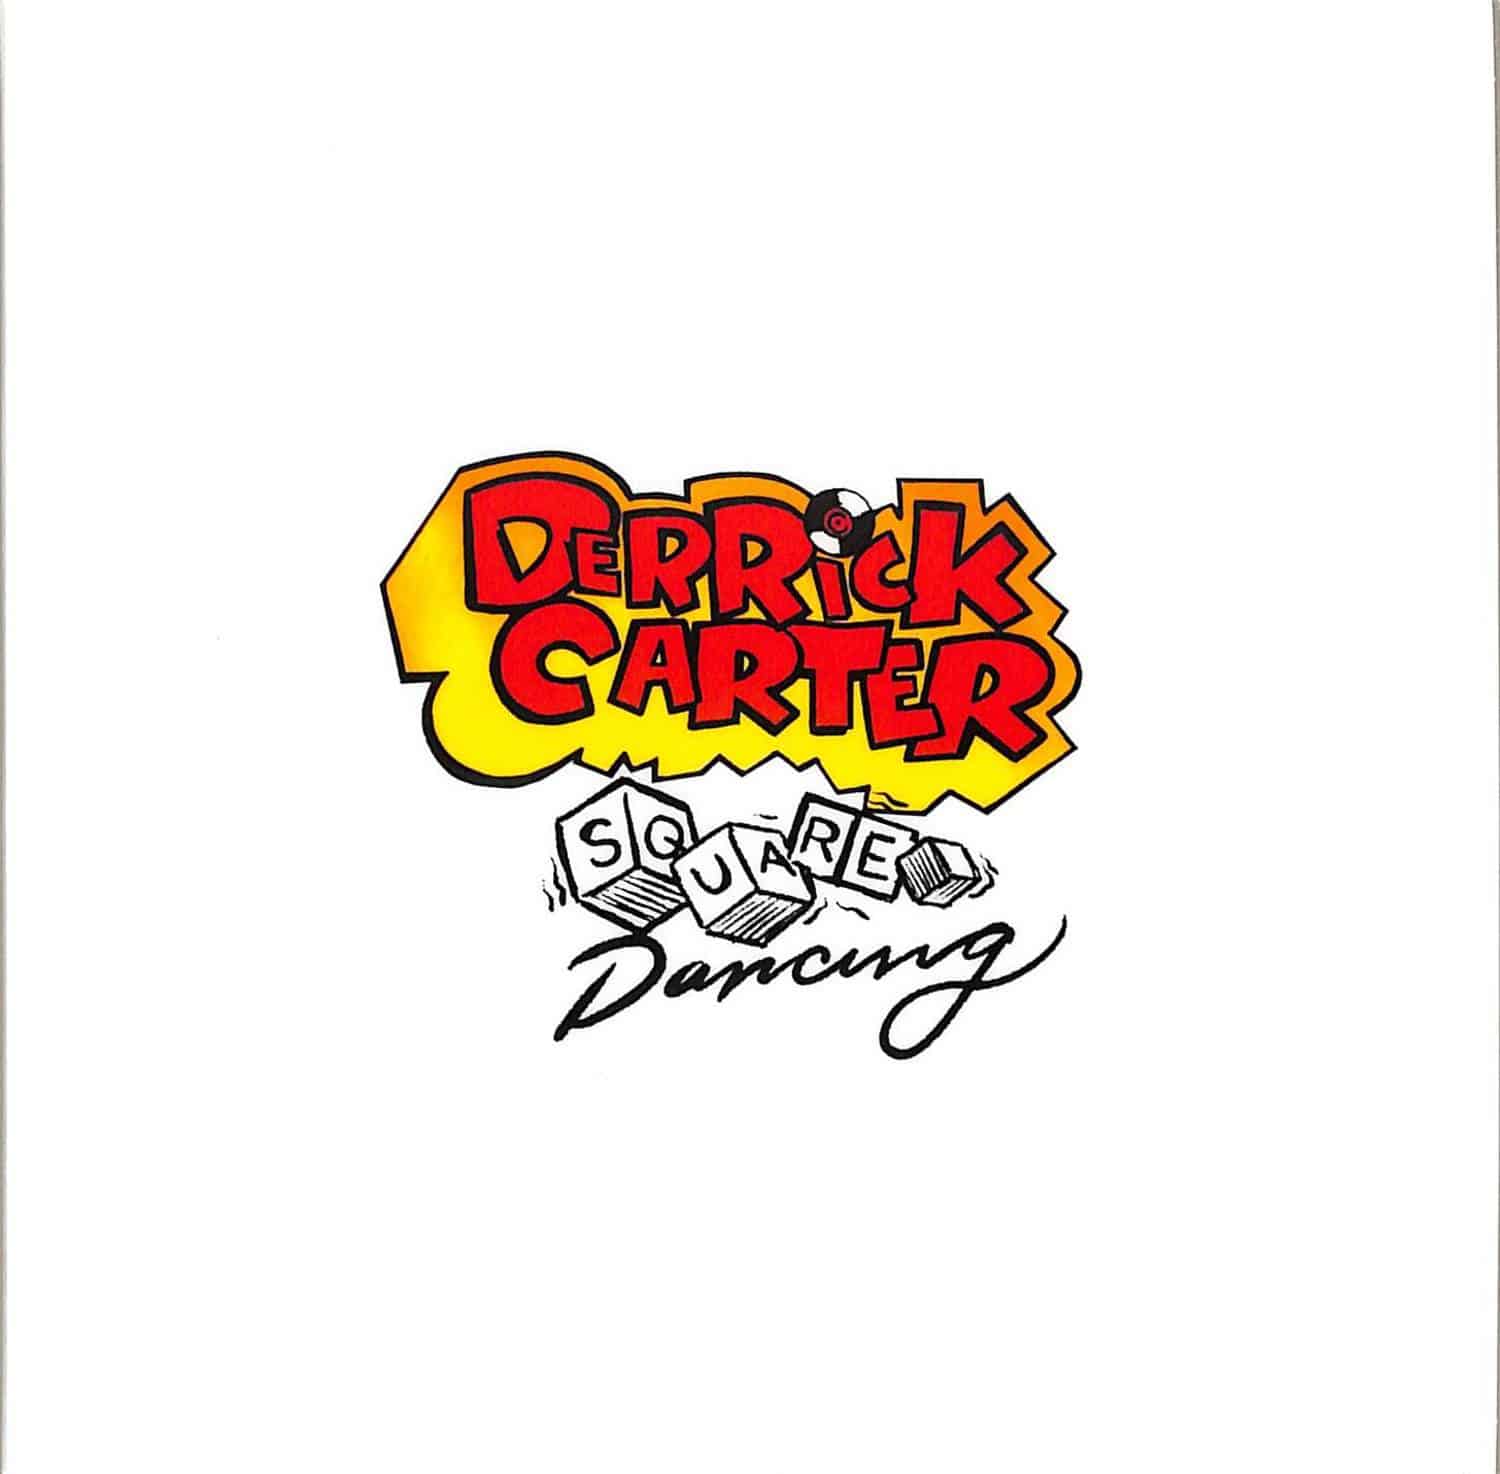 Derrick Carter - SQUAREDANCING 